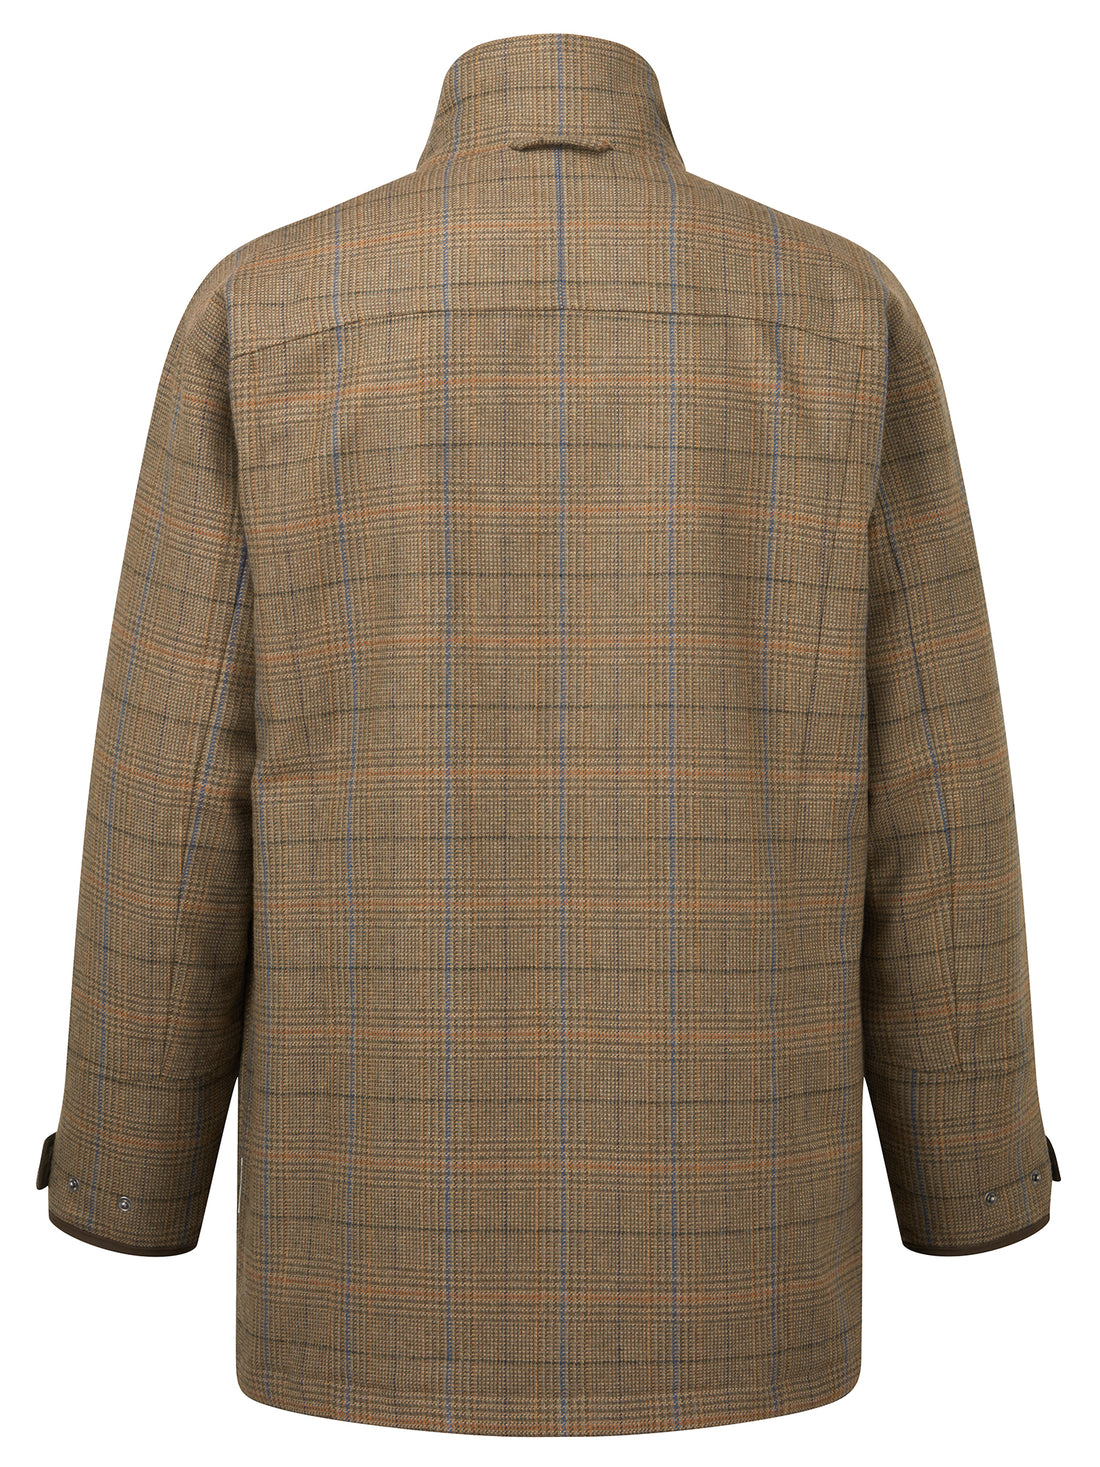 Ptarmigan Tweed Classic Coat - Arran Tweed